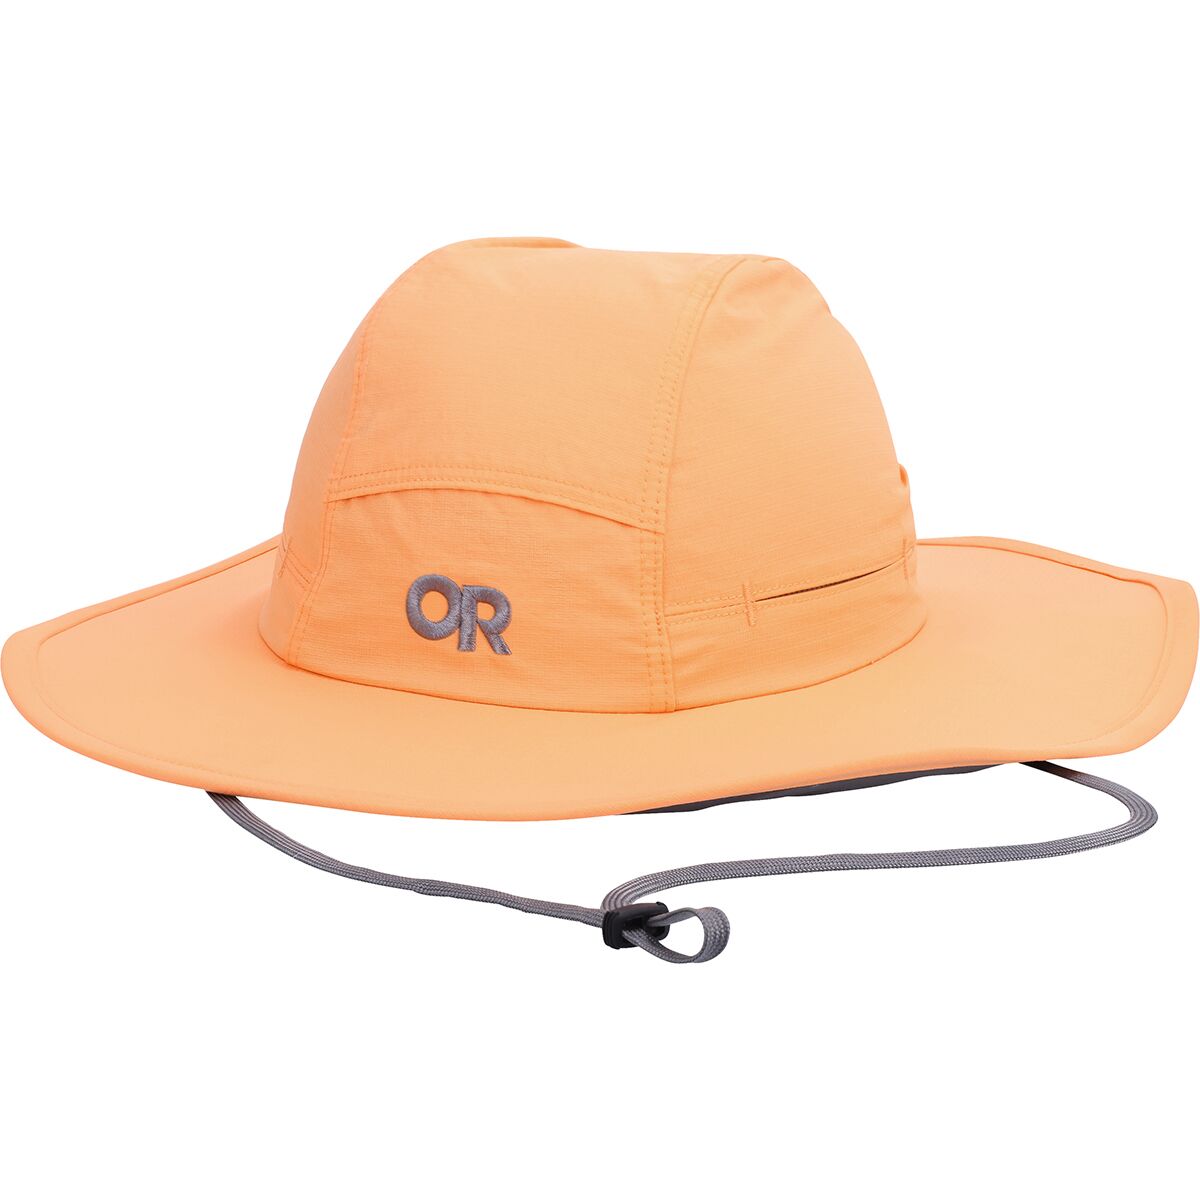 Outdoor Research - Sunbriolet Sun Hat - XL Orange Fizz